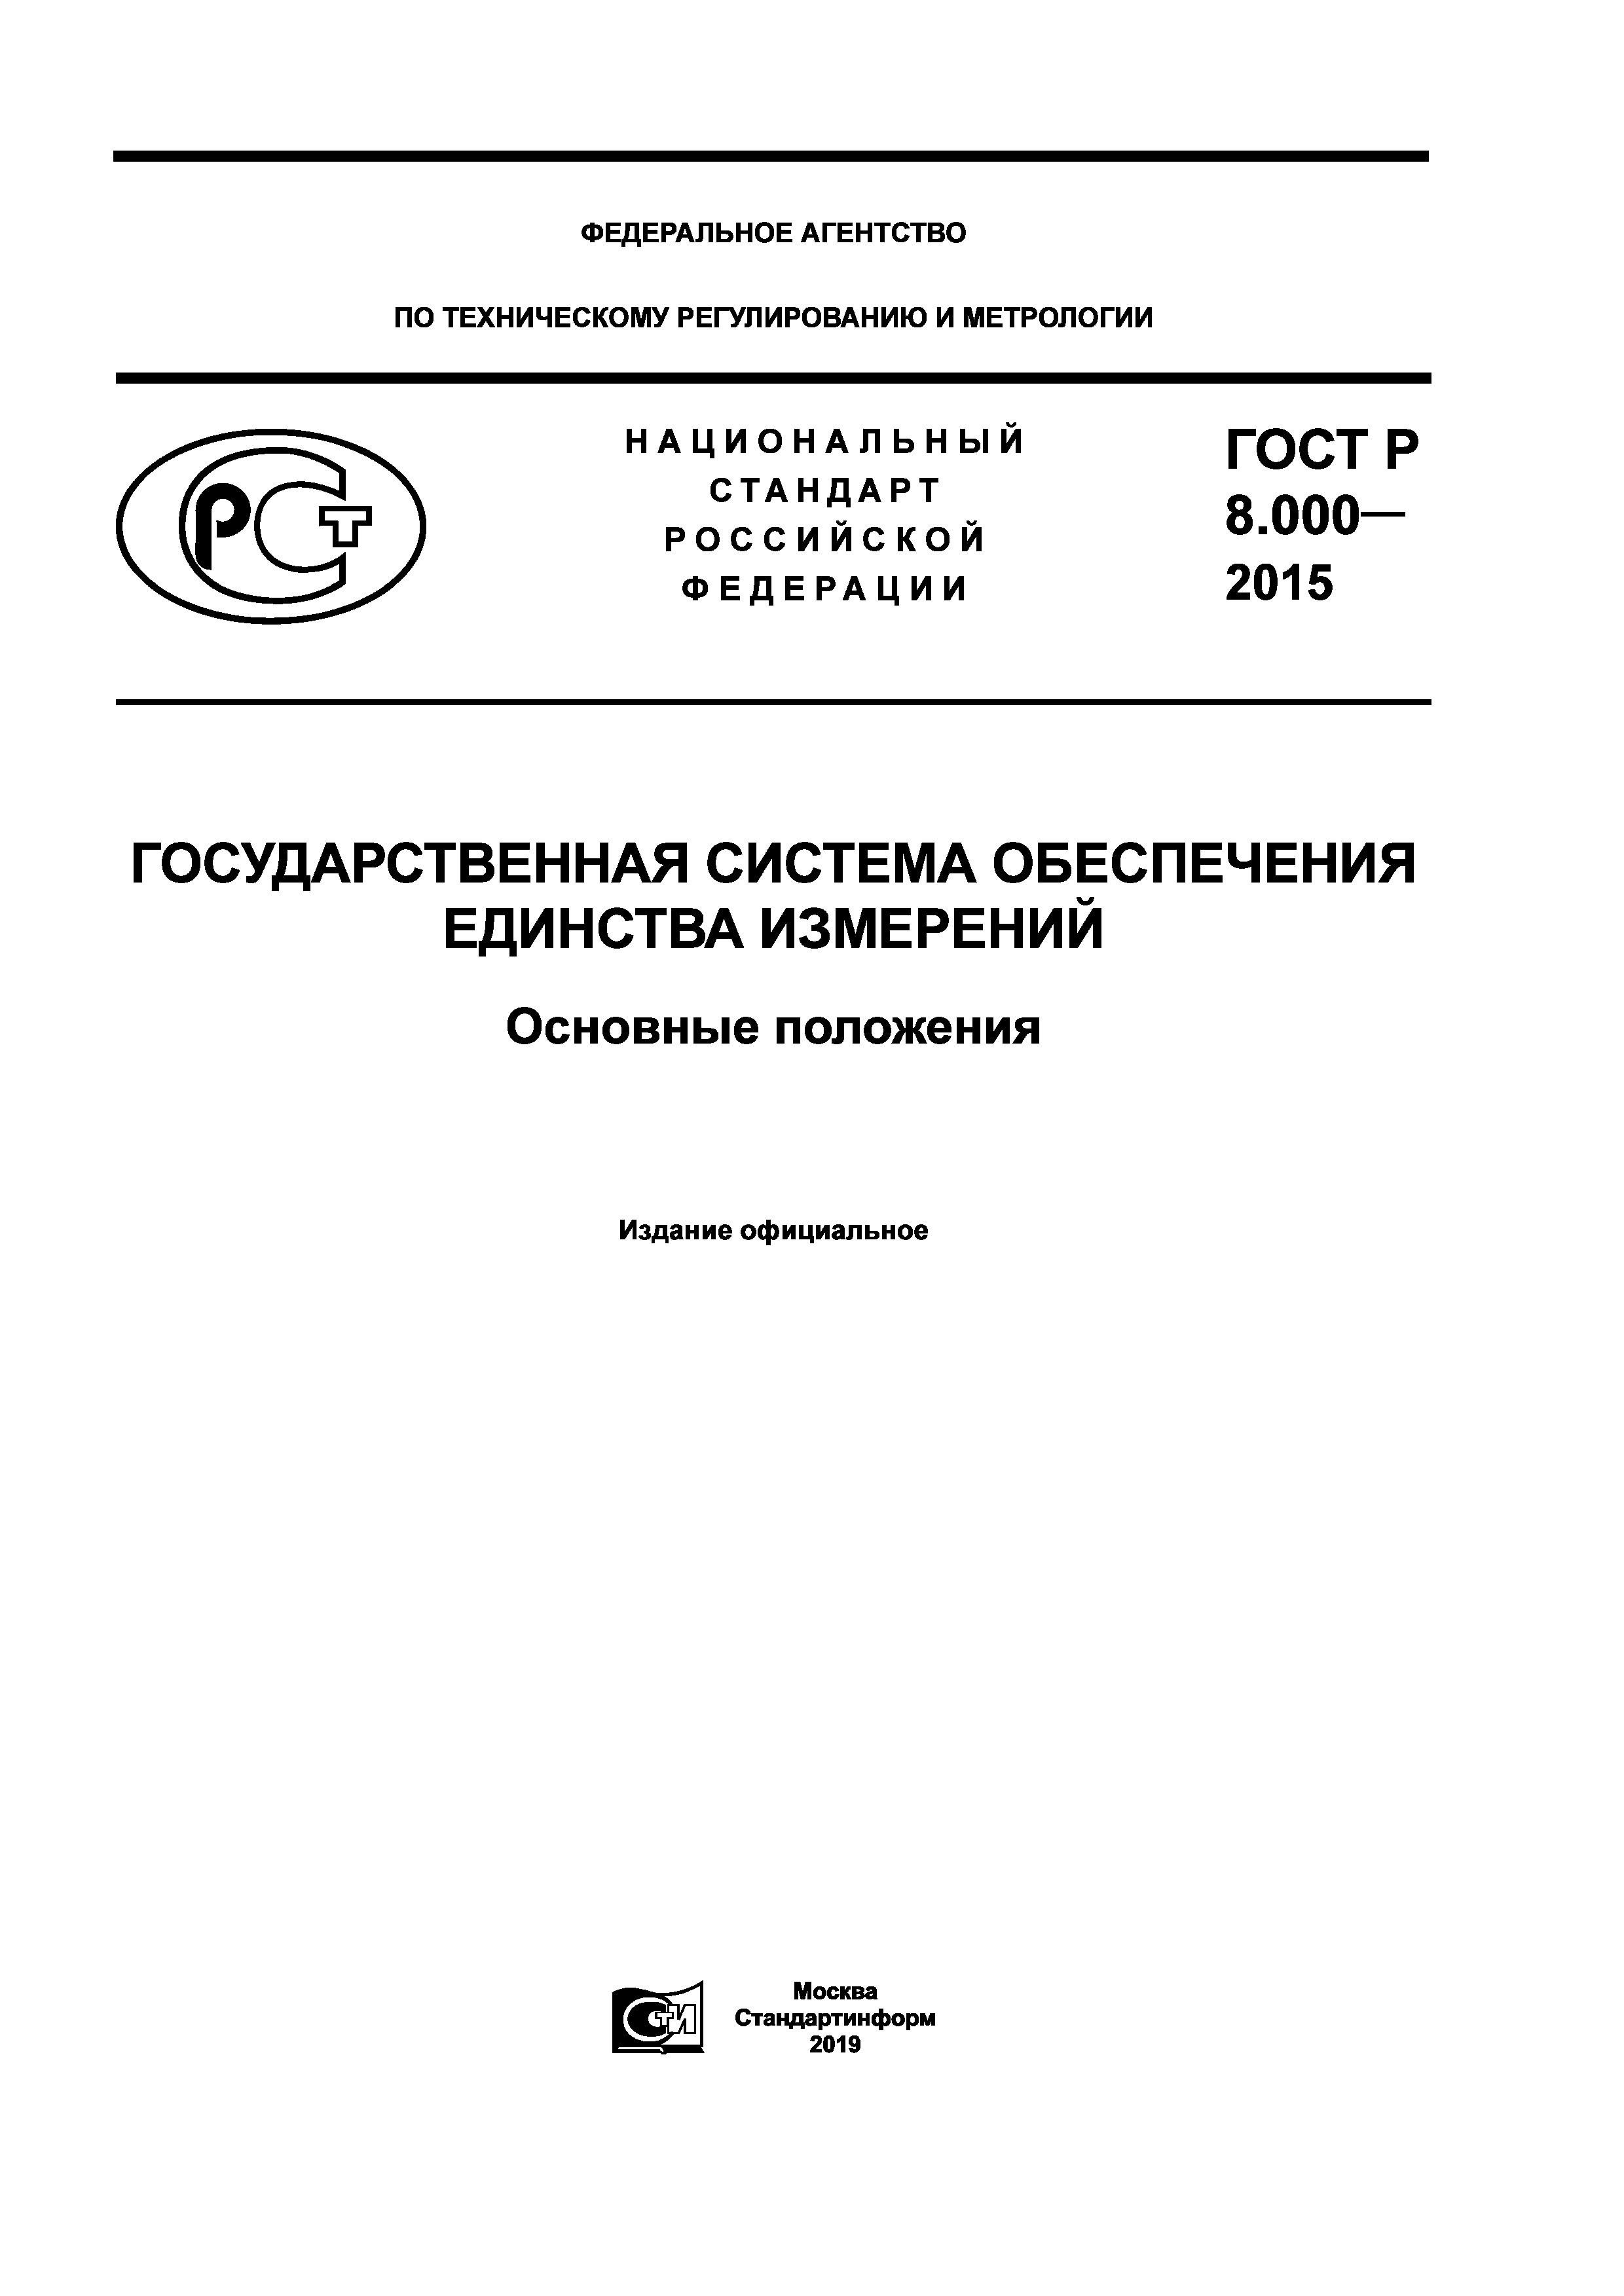 ГОСТ Р 8.000-2015